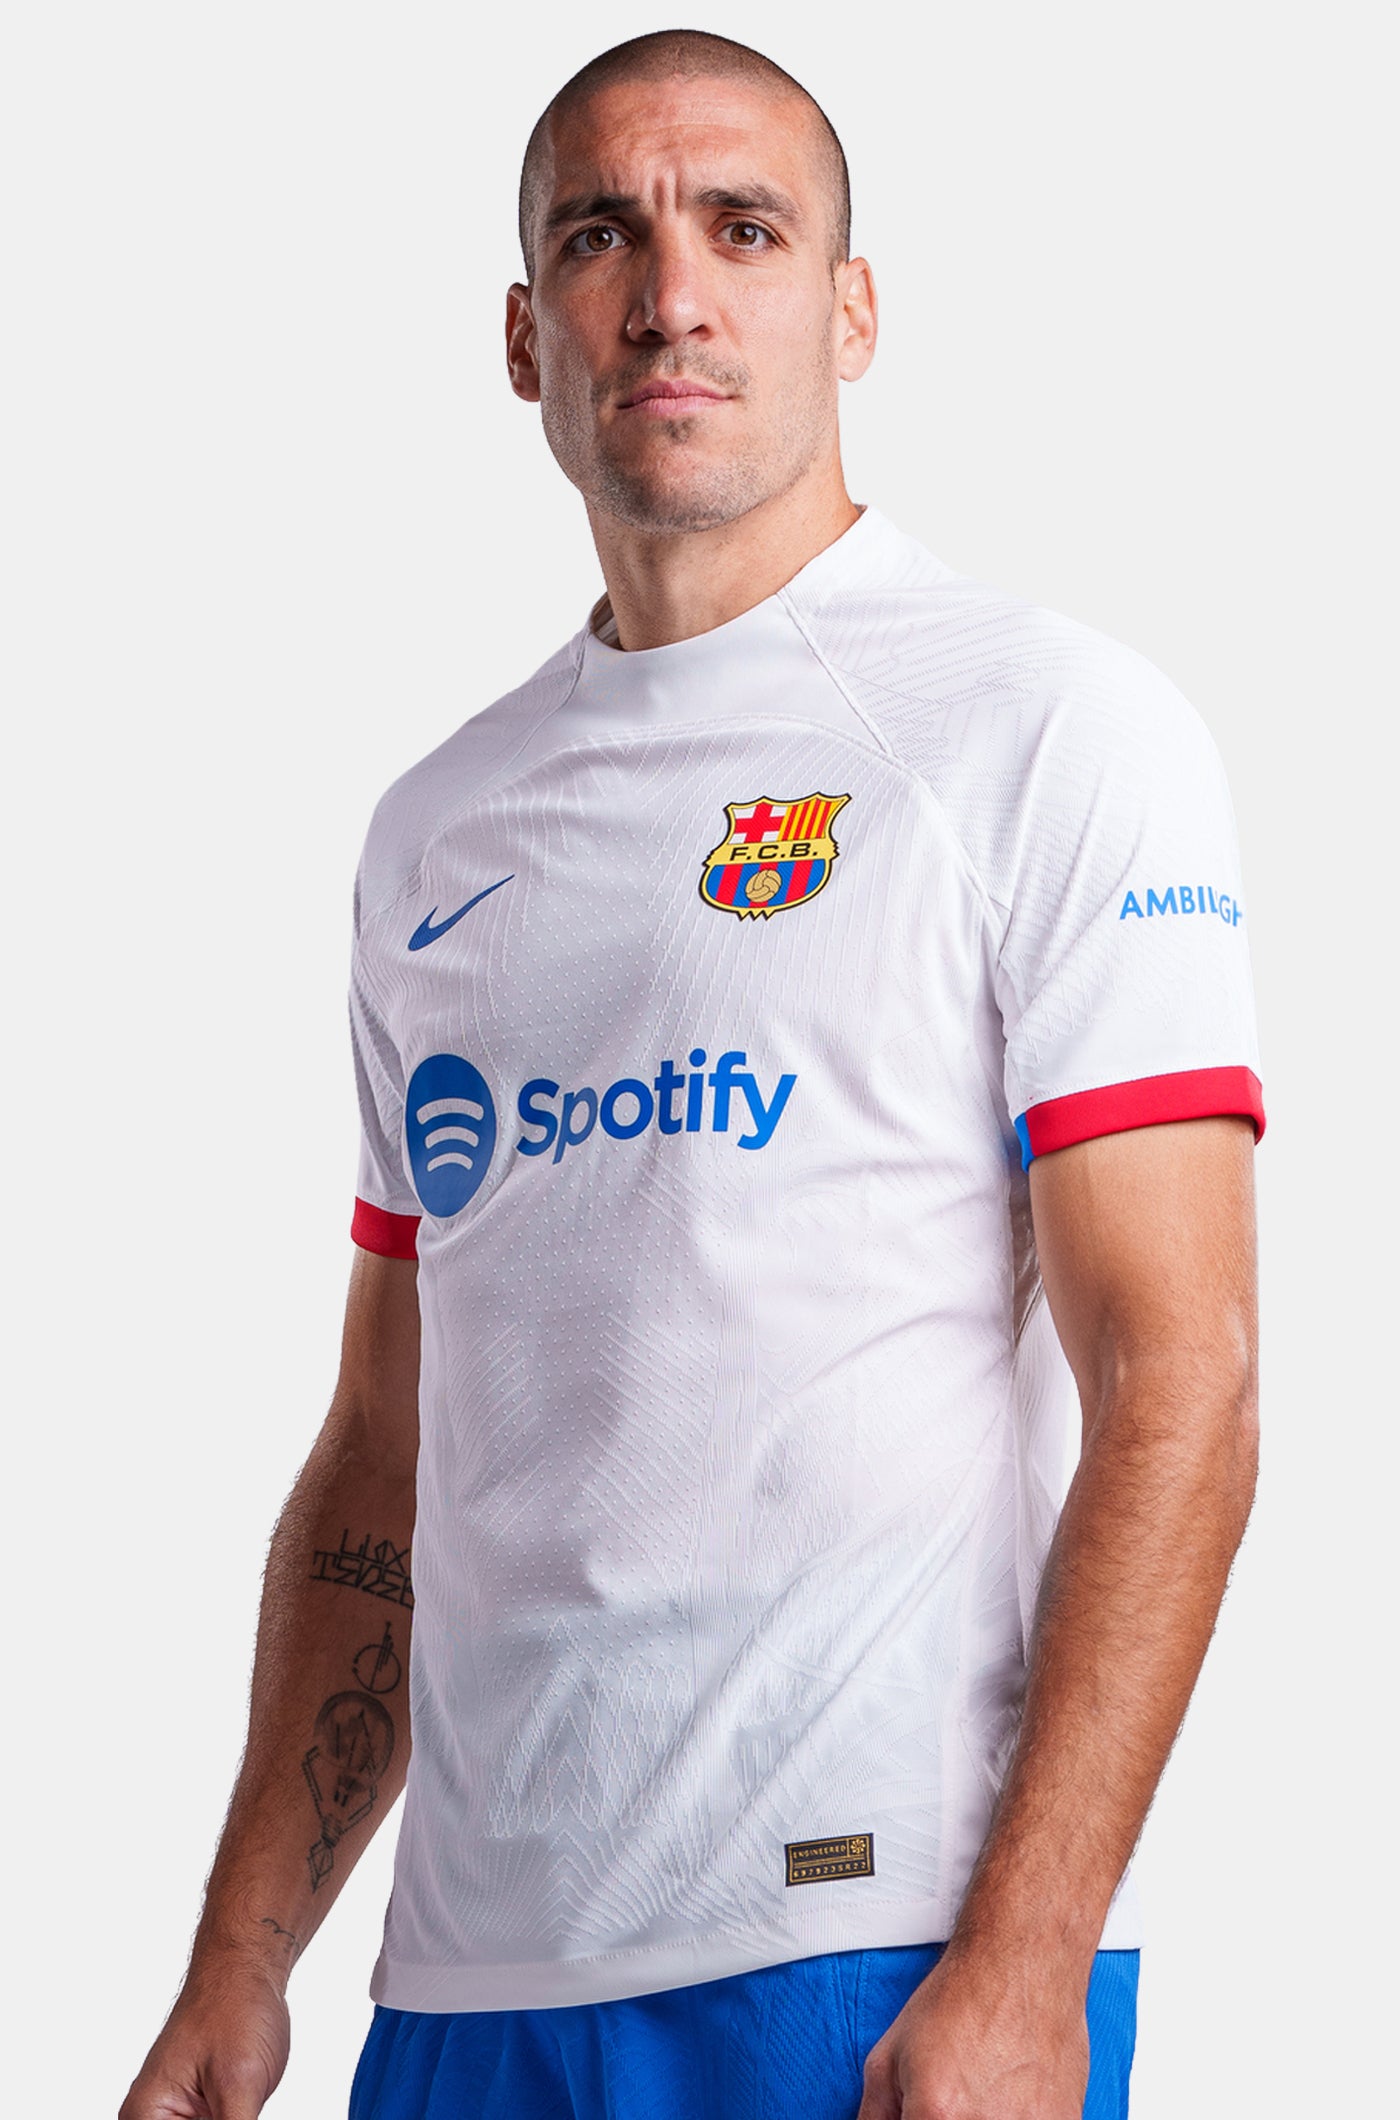 UCL FC Barcelona away shirt 23/24 Player’s Edition - ROMEU